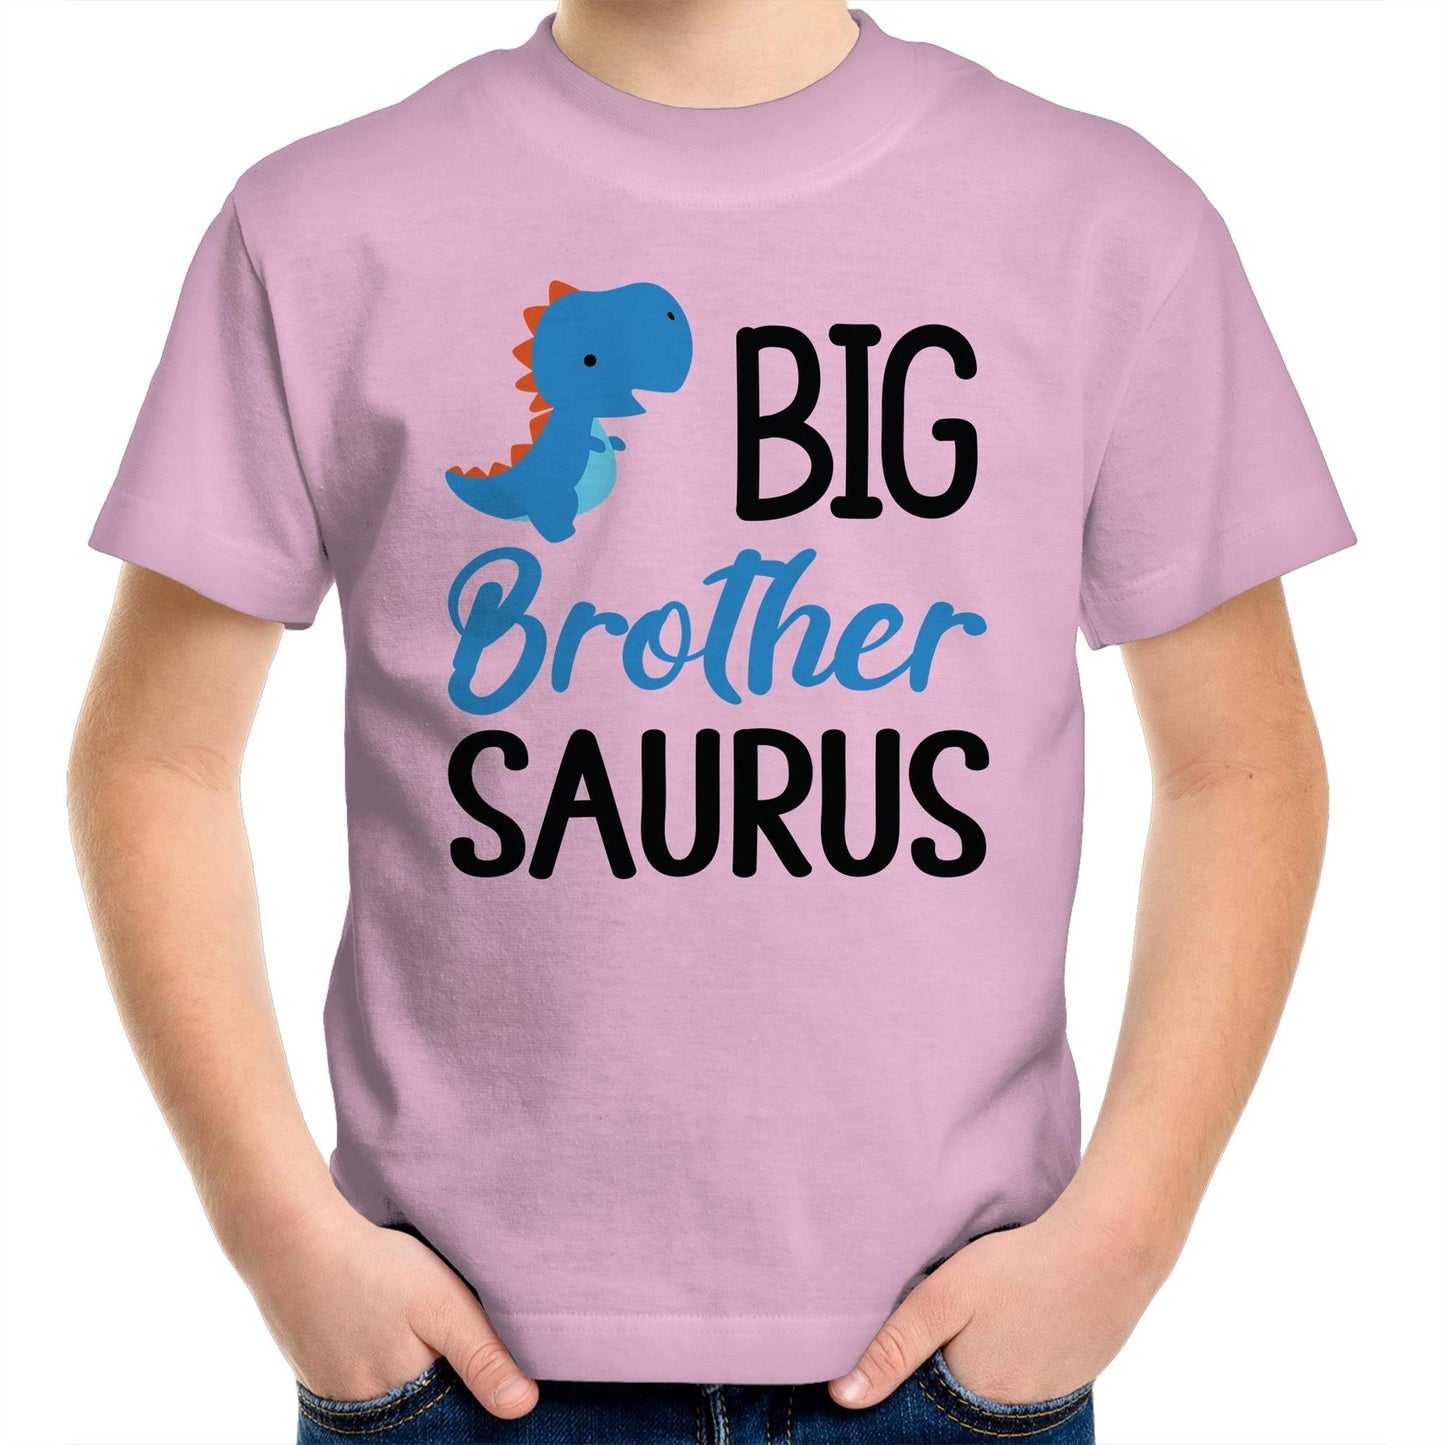 Big Brother Saurus t shirt for kids